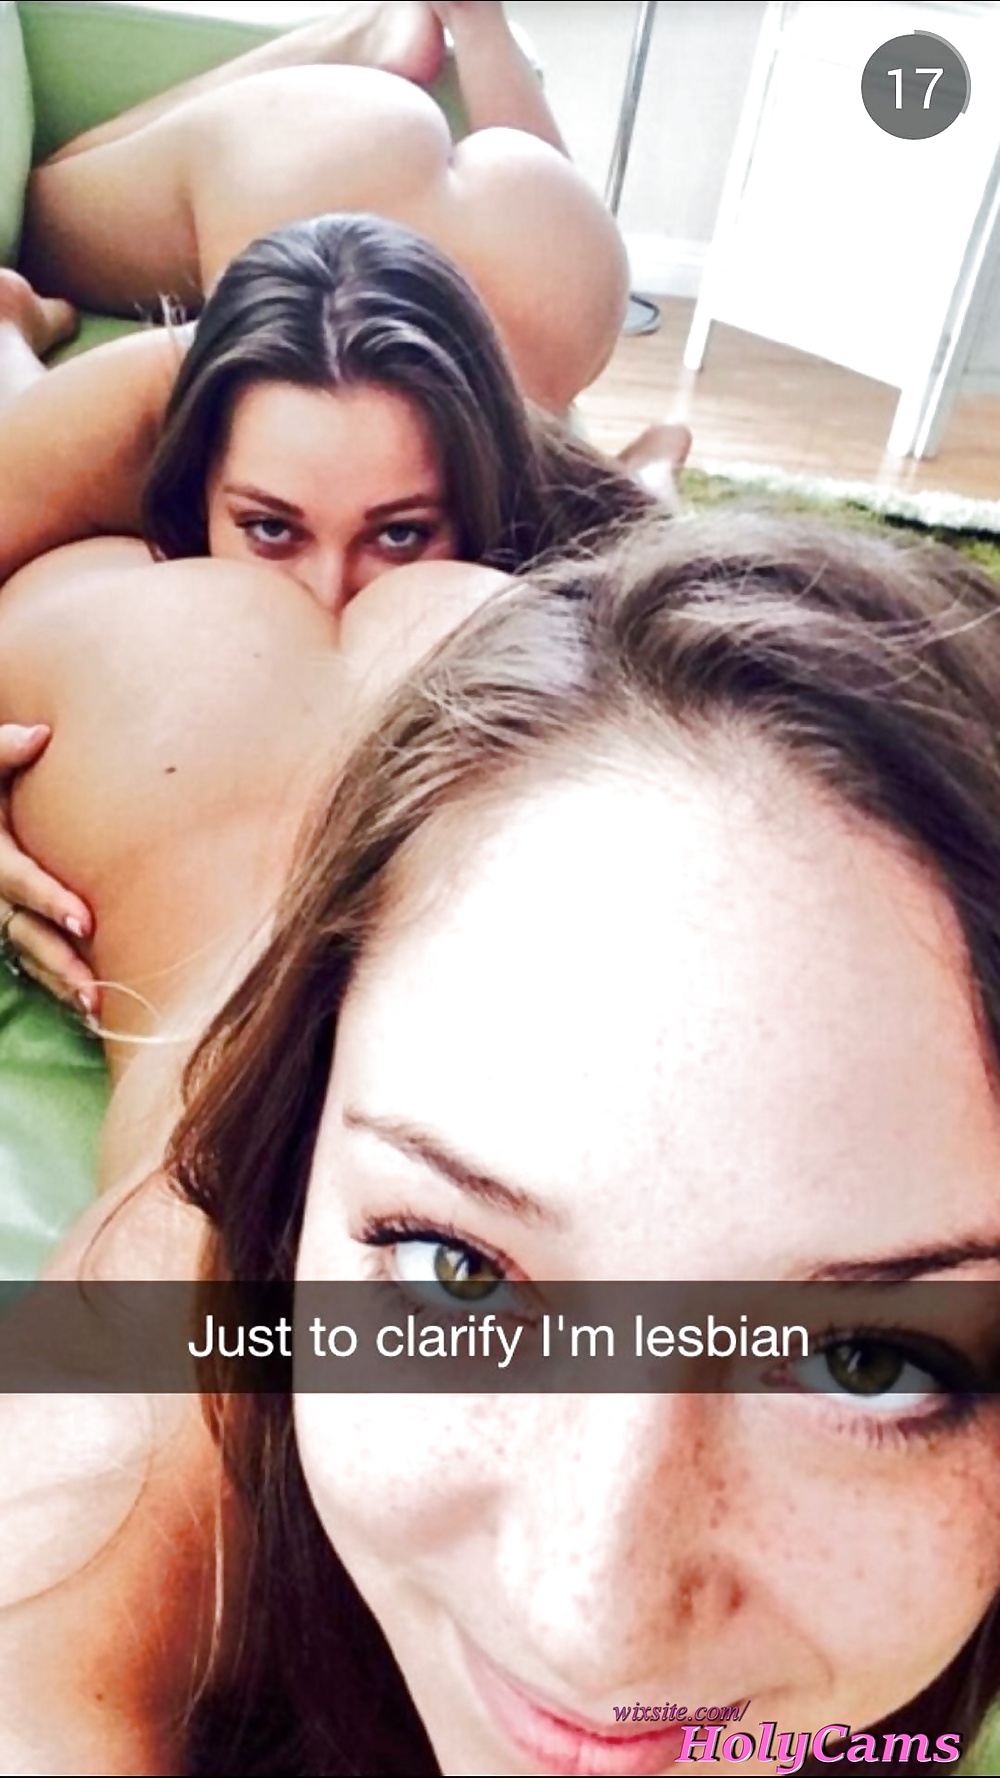 Snapchat exposed sluts - 15 photos